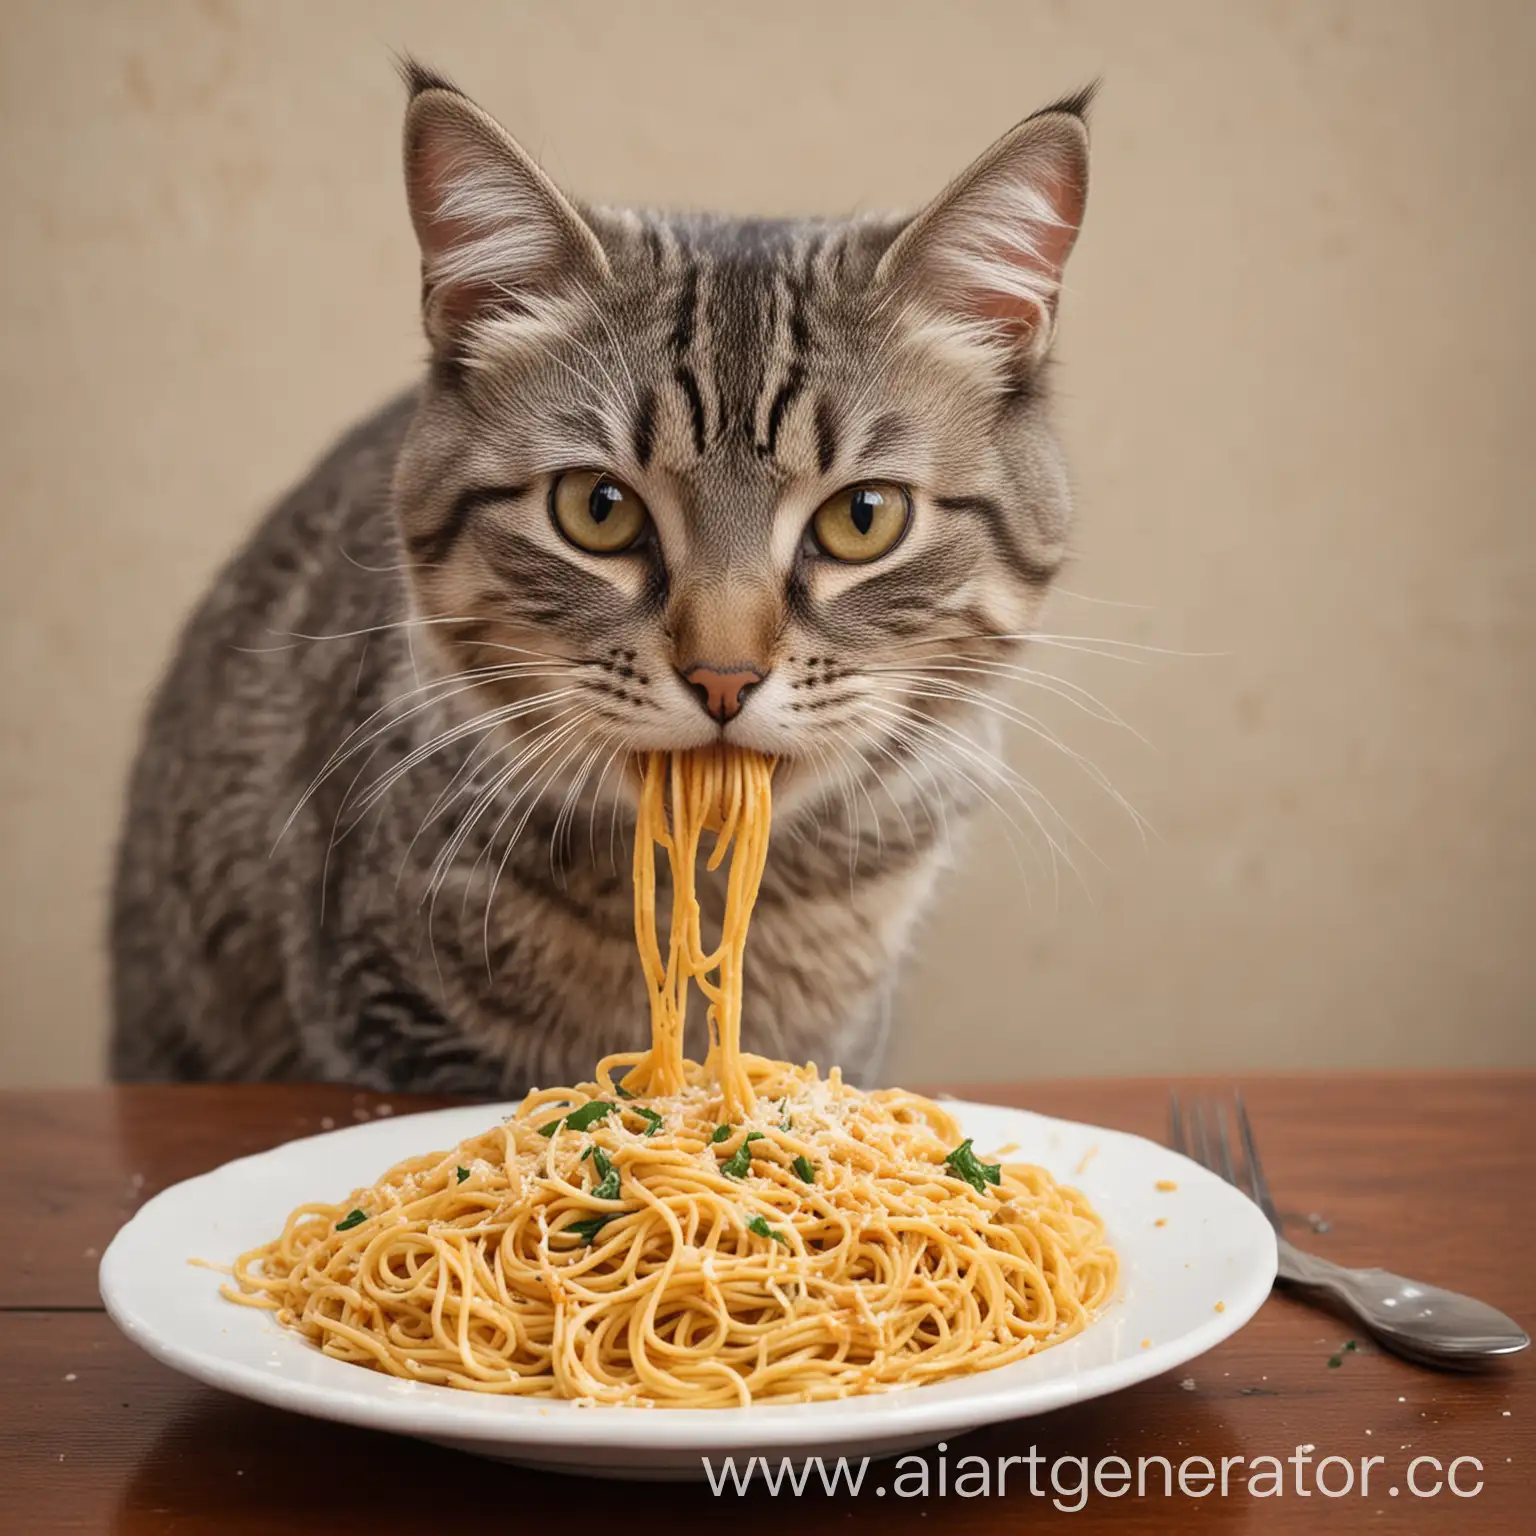 Adorable-Cat-Enjoying-a-Plate-of-Spaghetti